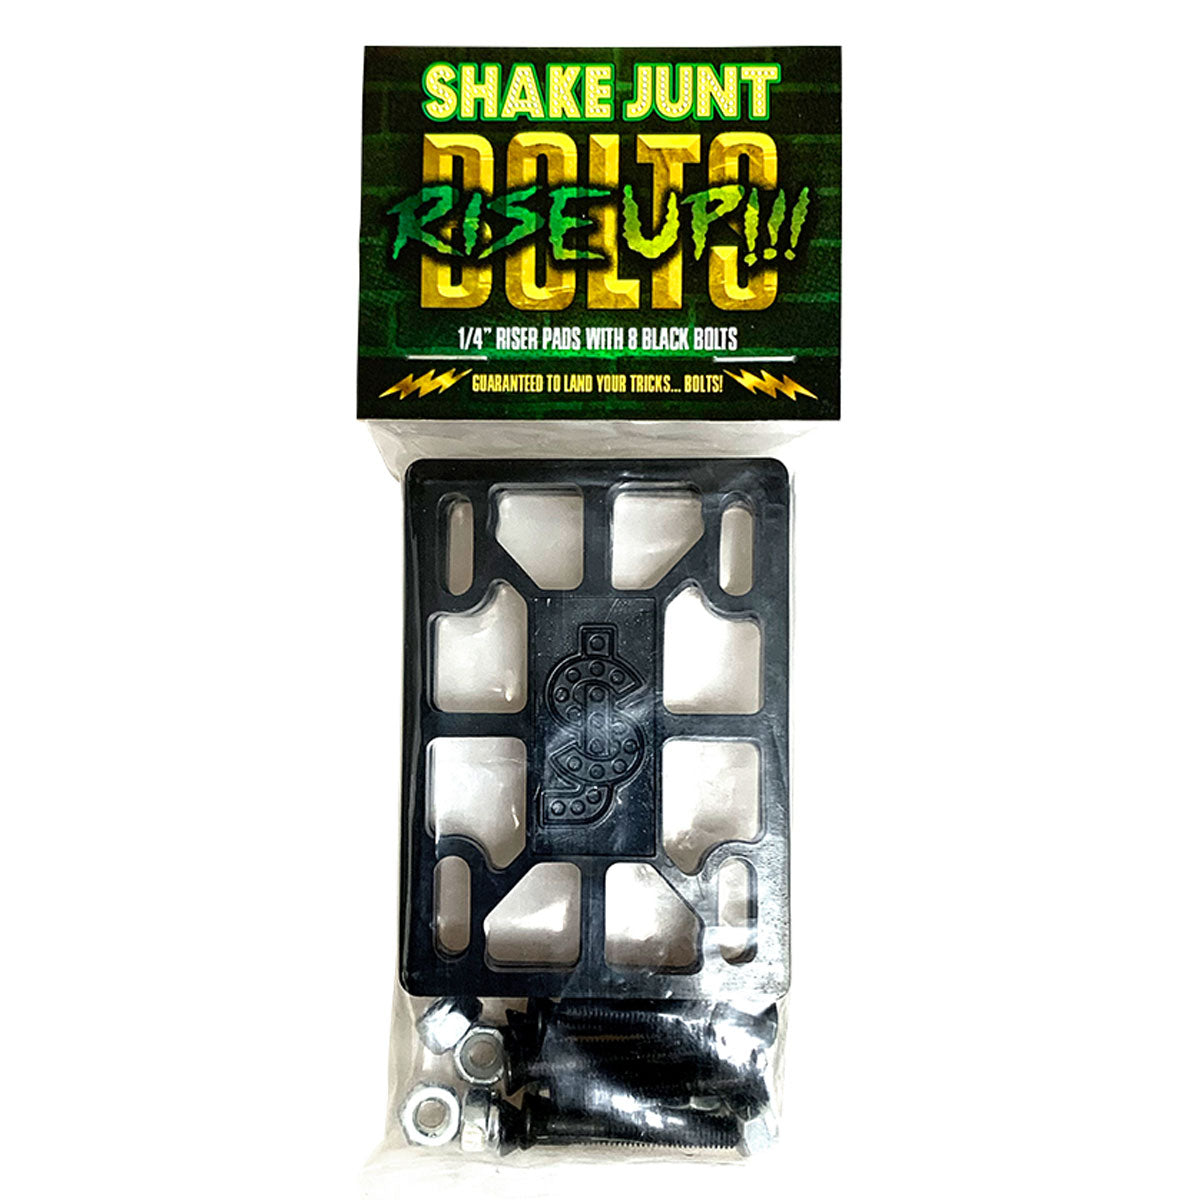 Shake Junt Rise Up Hardware - Phillips - 1.25